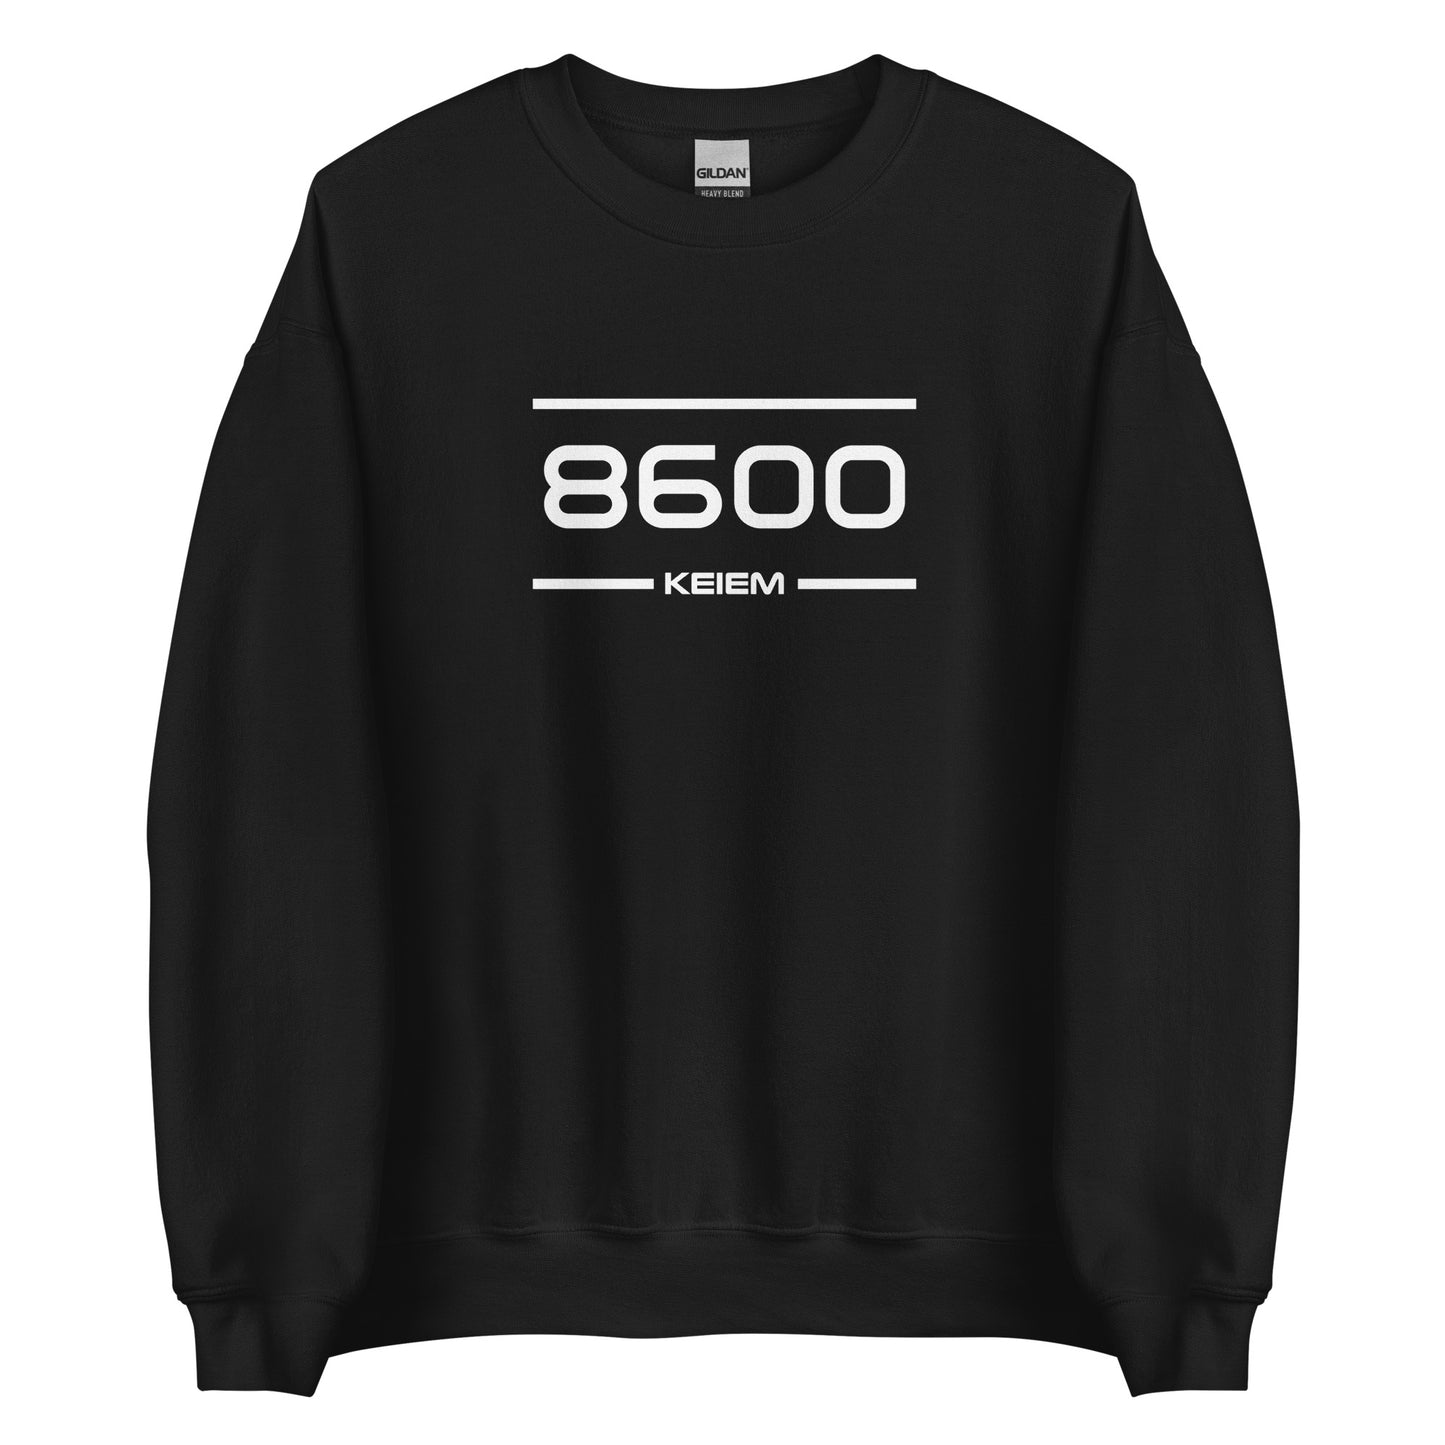 Sweater - 8600 - Keiem (M/V)